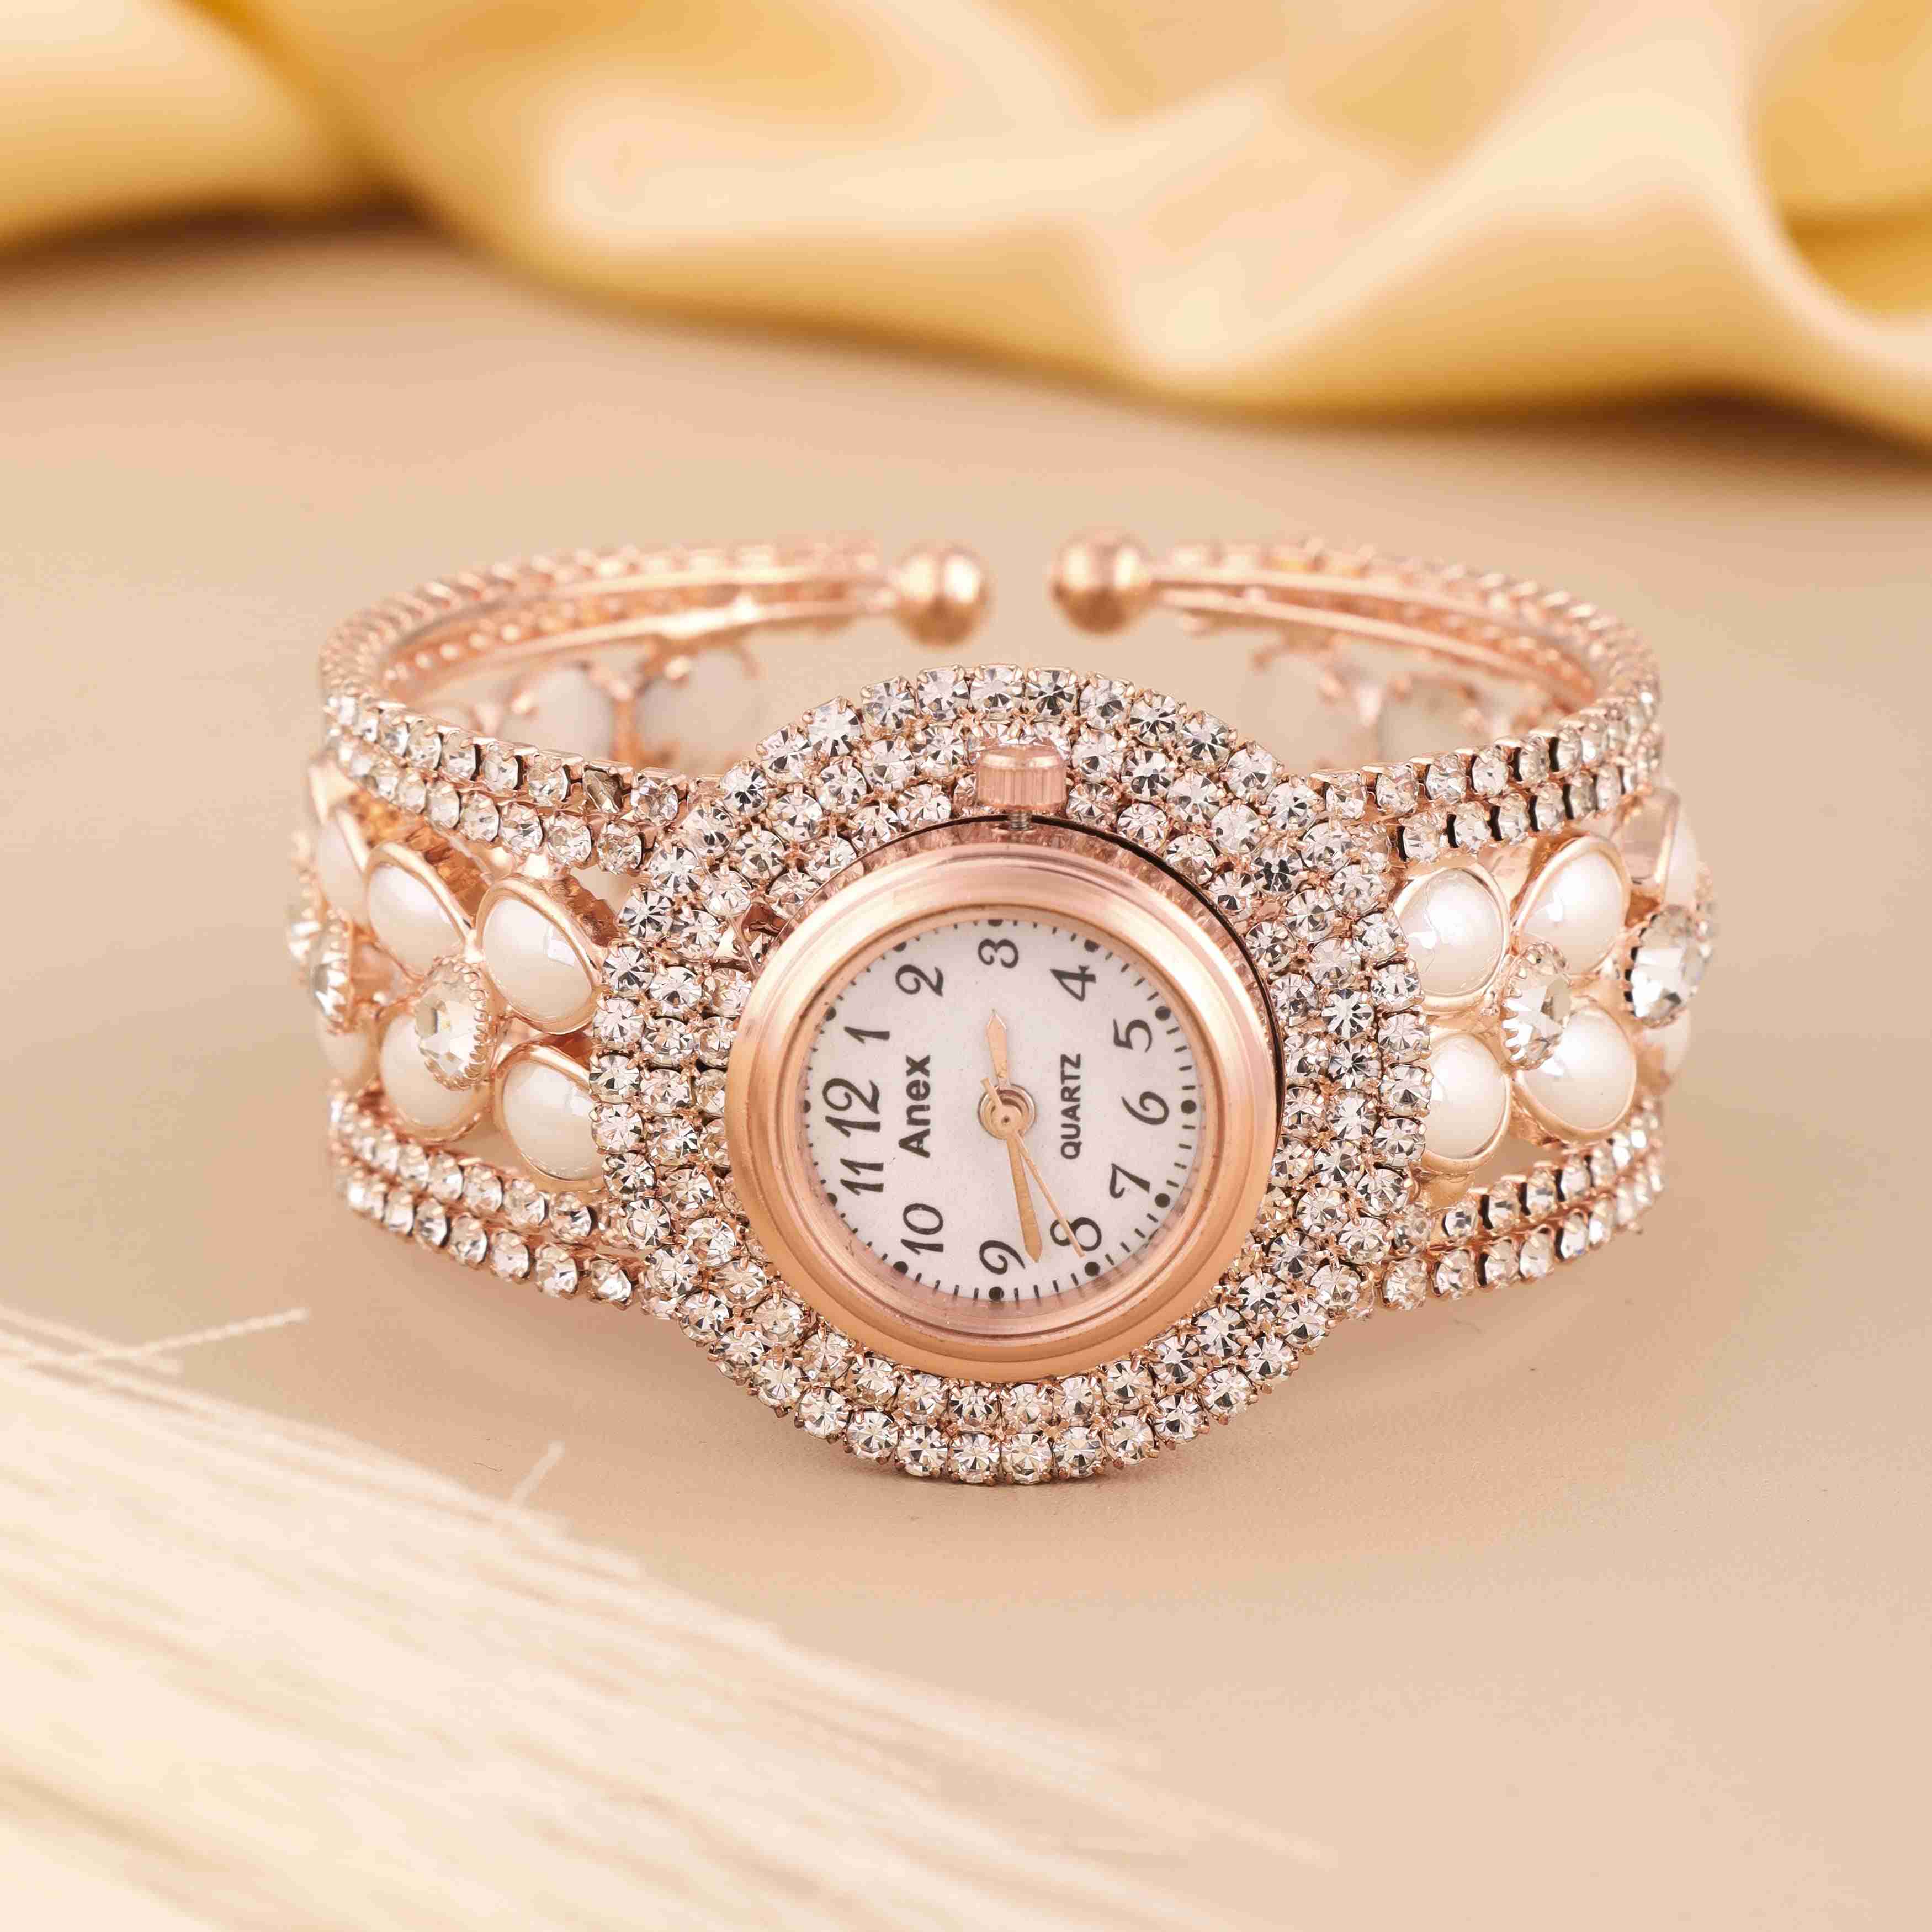 Bracelet Watch - Buy Bracelet Watch Online At Best Price | Myntra